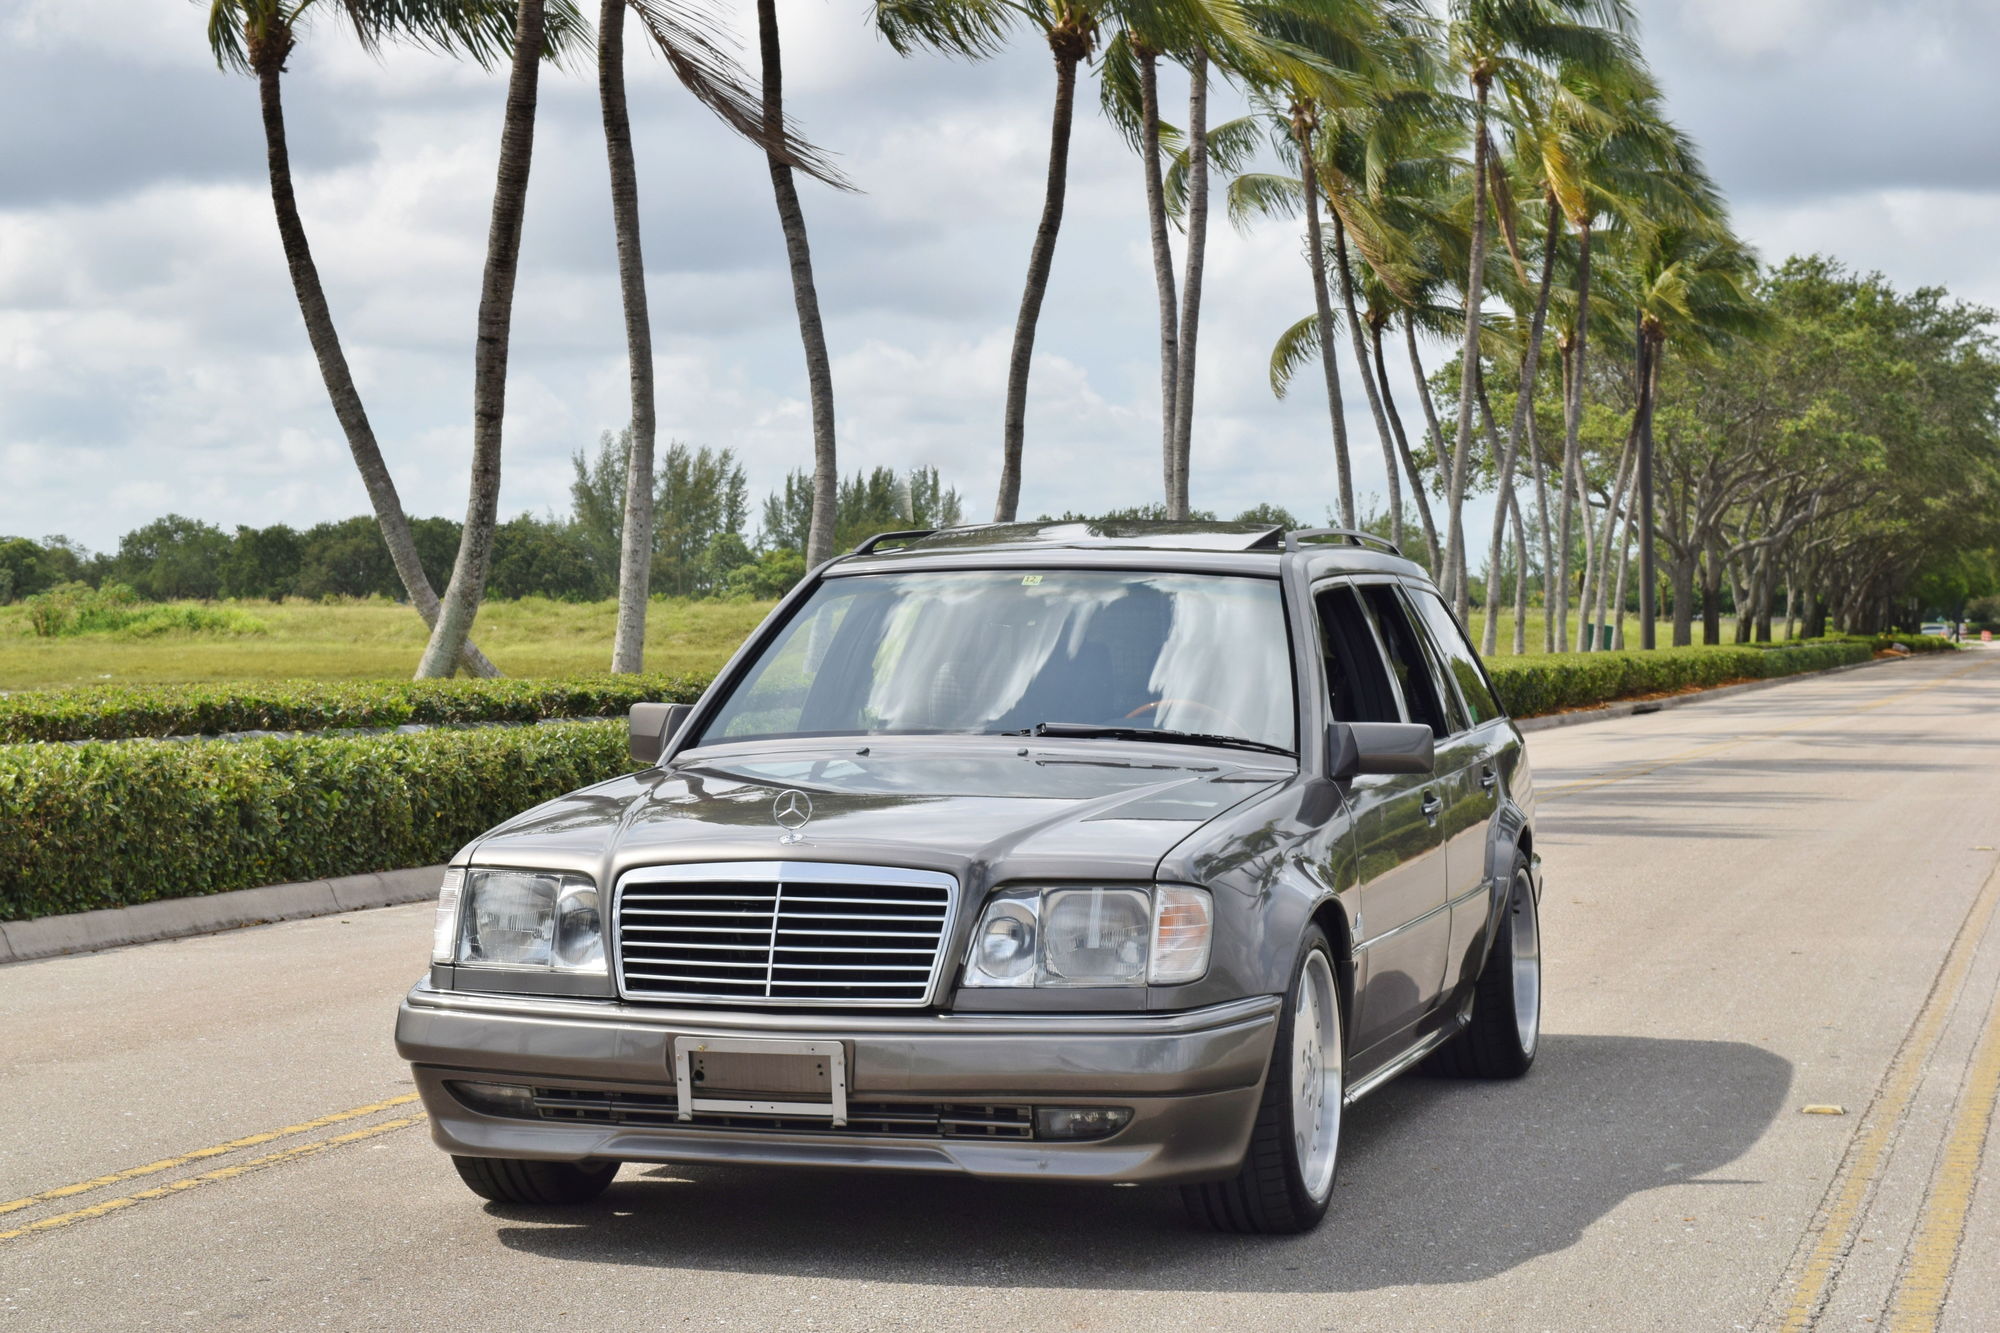 1991 Mercedes-Benz 300TE - Rare W124 Wagon AMG Wide Body - Used - VIN WDB1240901F185449 - 110,000 Miles - 6 cyl - 2WD - Automatic - Wagon - Gray - Miami, FL 33126, United States